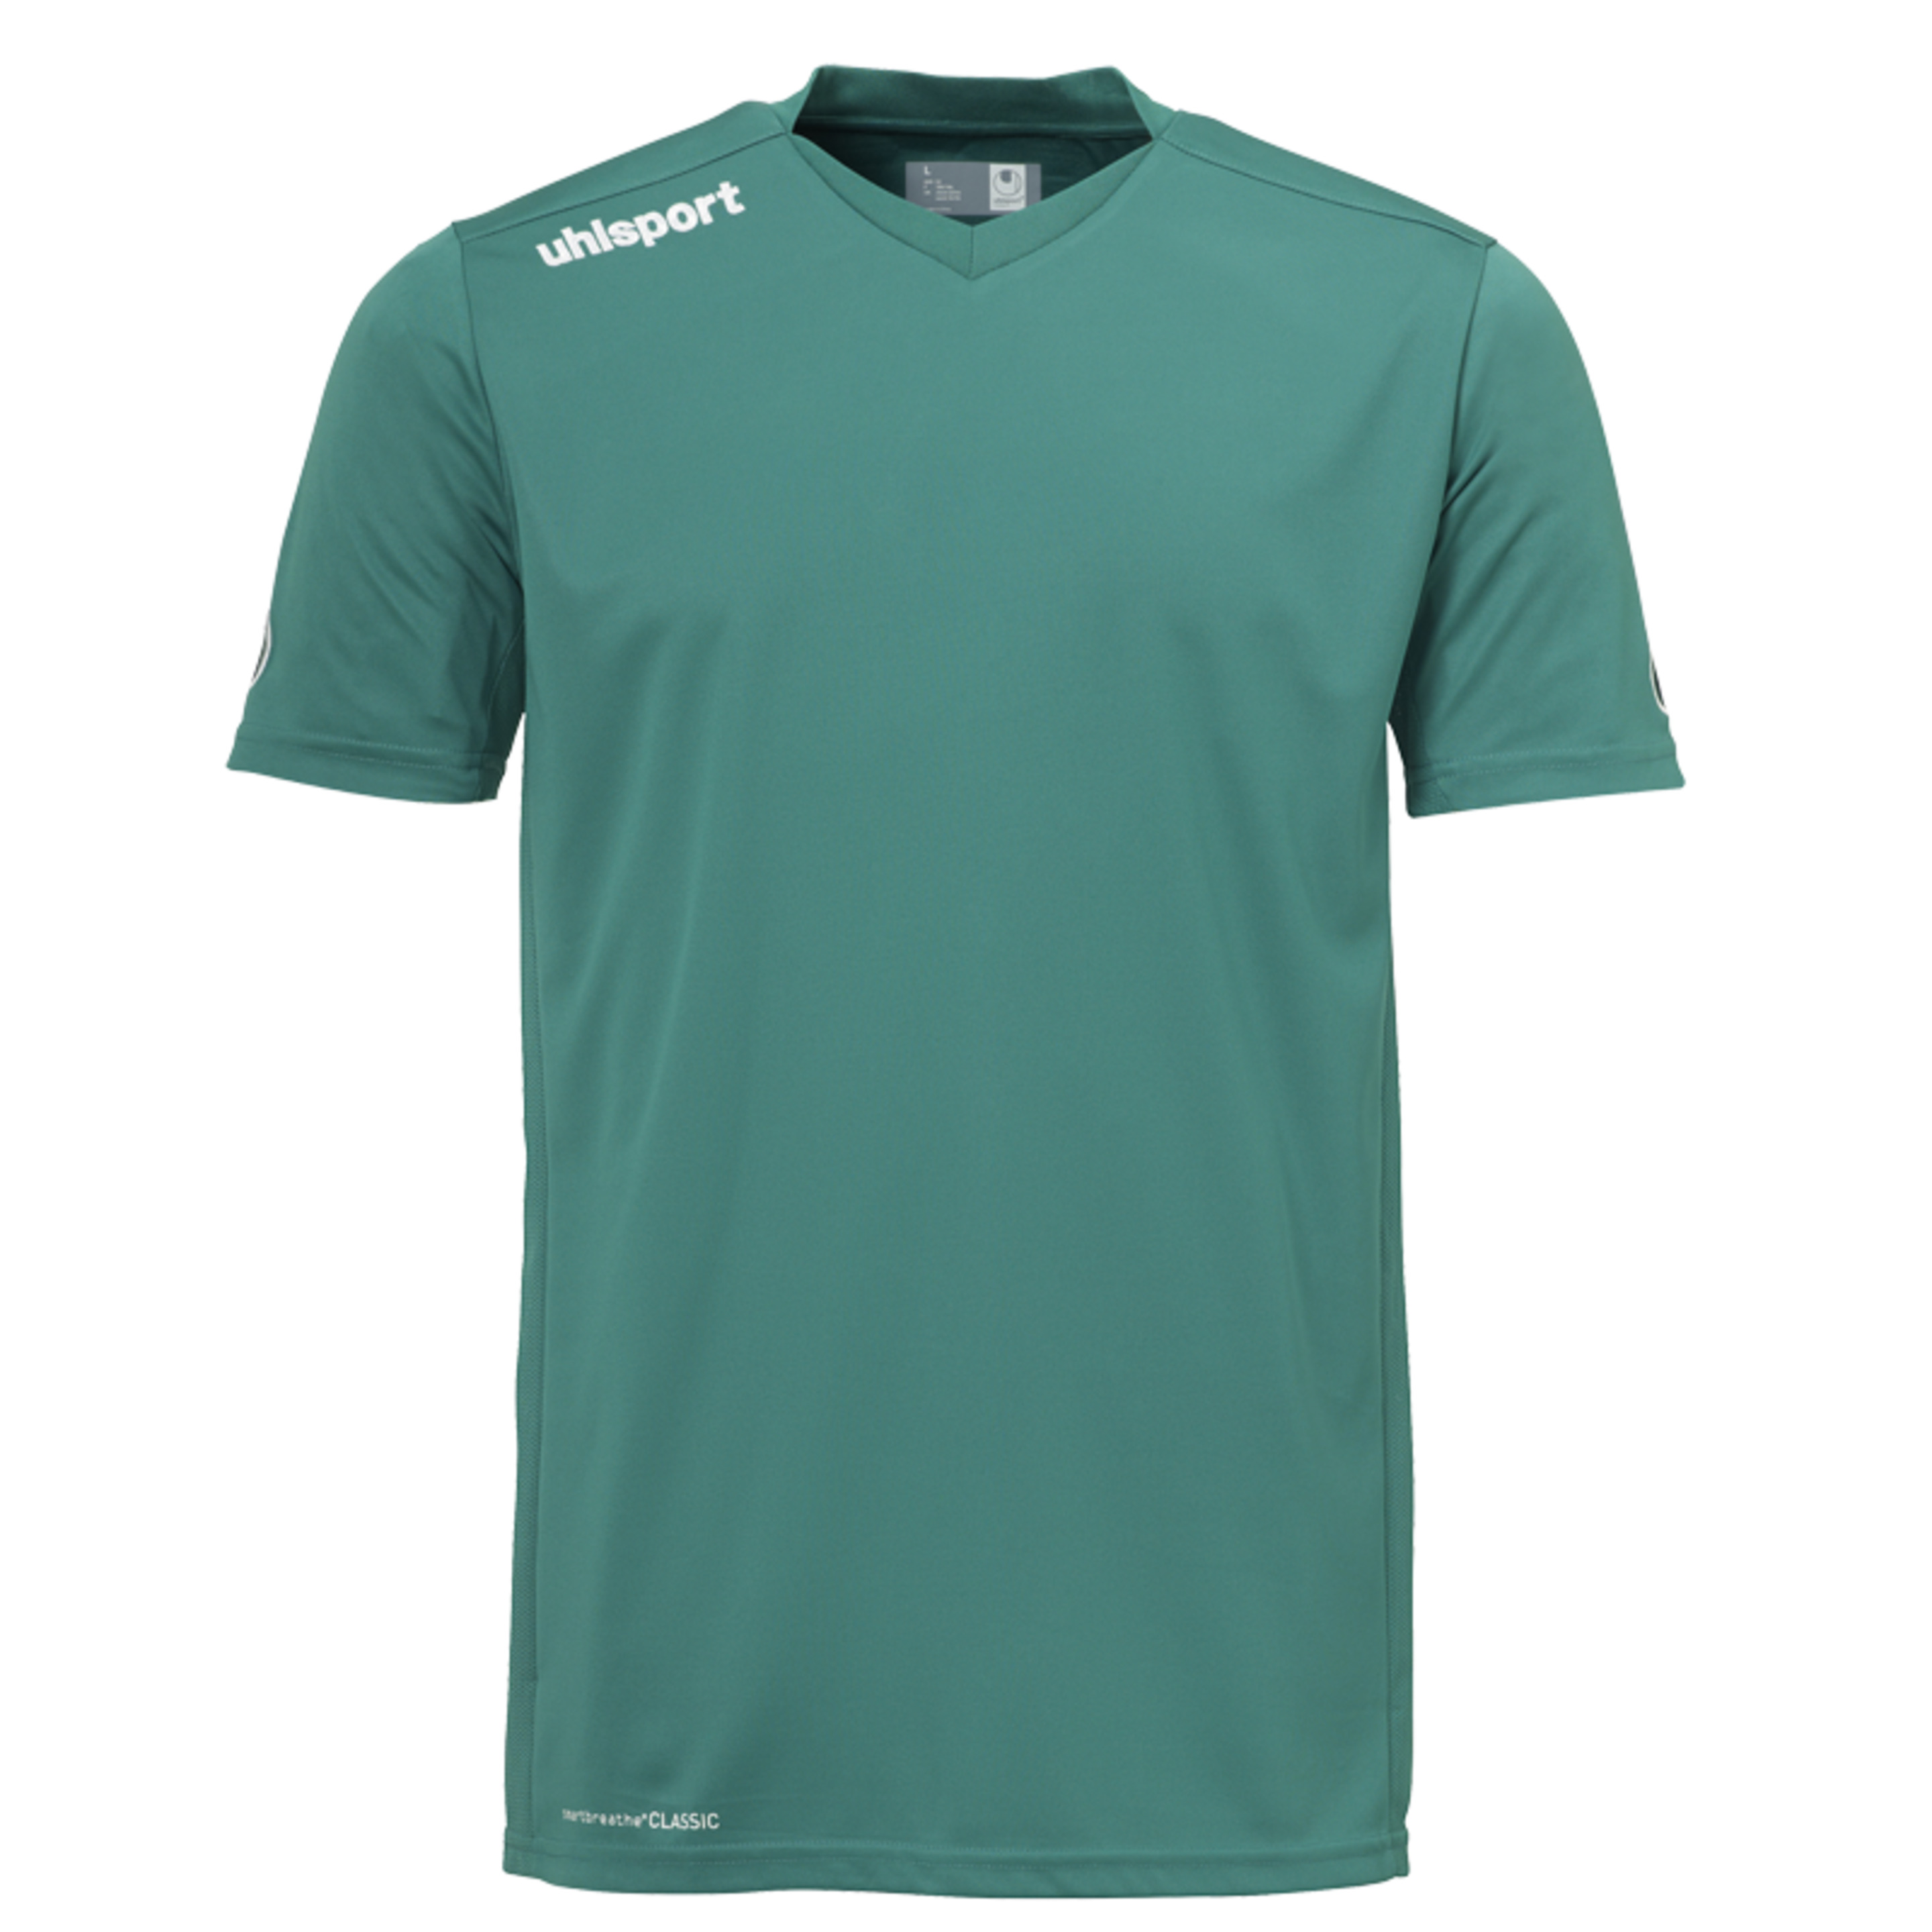 Hattrick Camiseta Mc Lagoon Uhlsport - verde - 